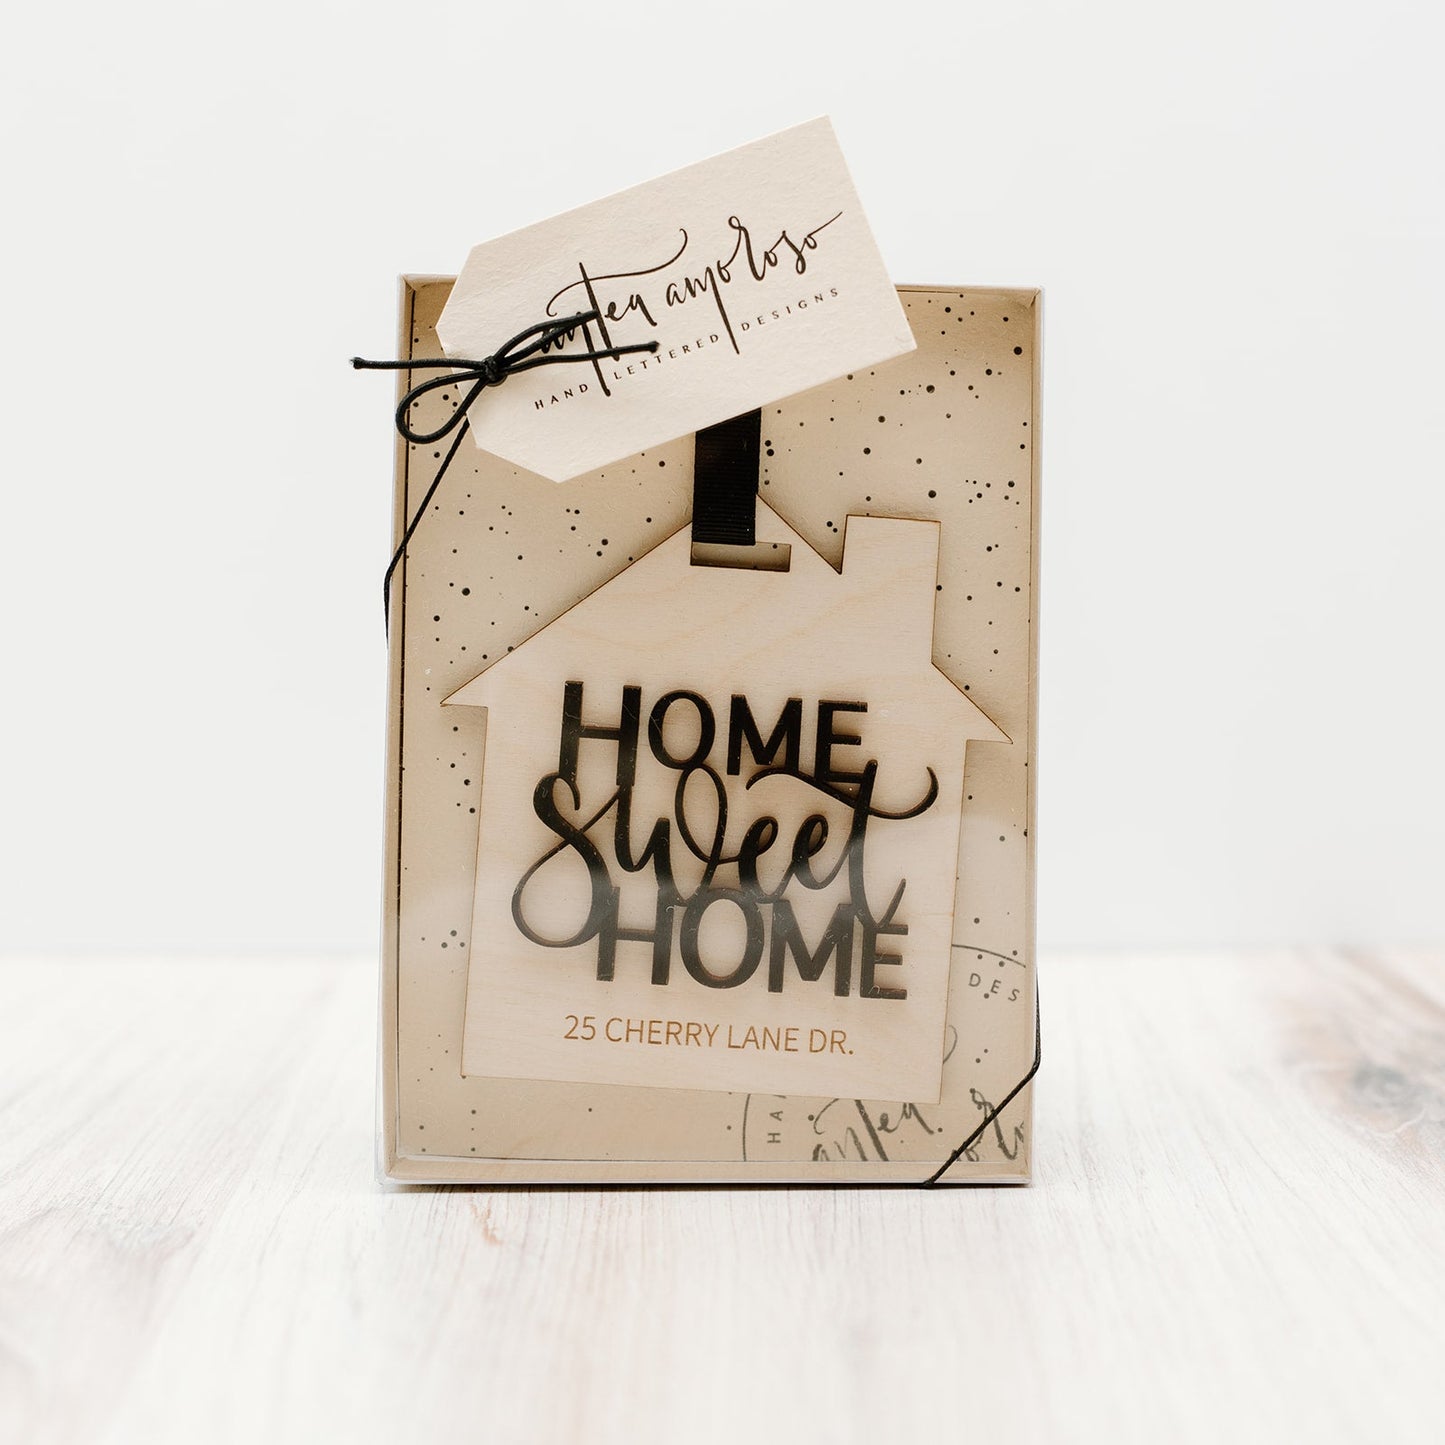 Home Sweet Home + Address Ornament